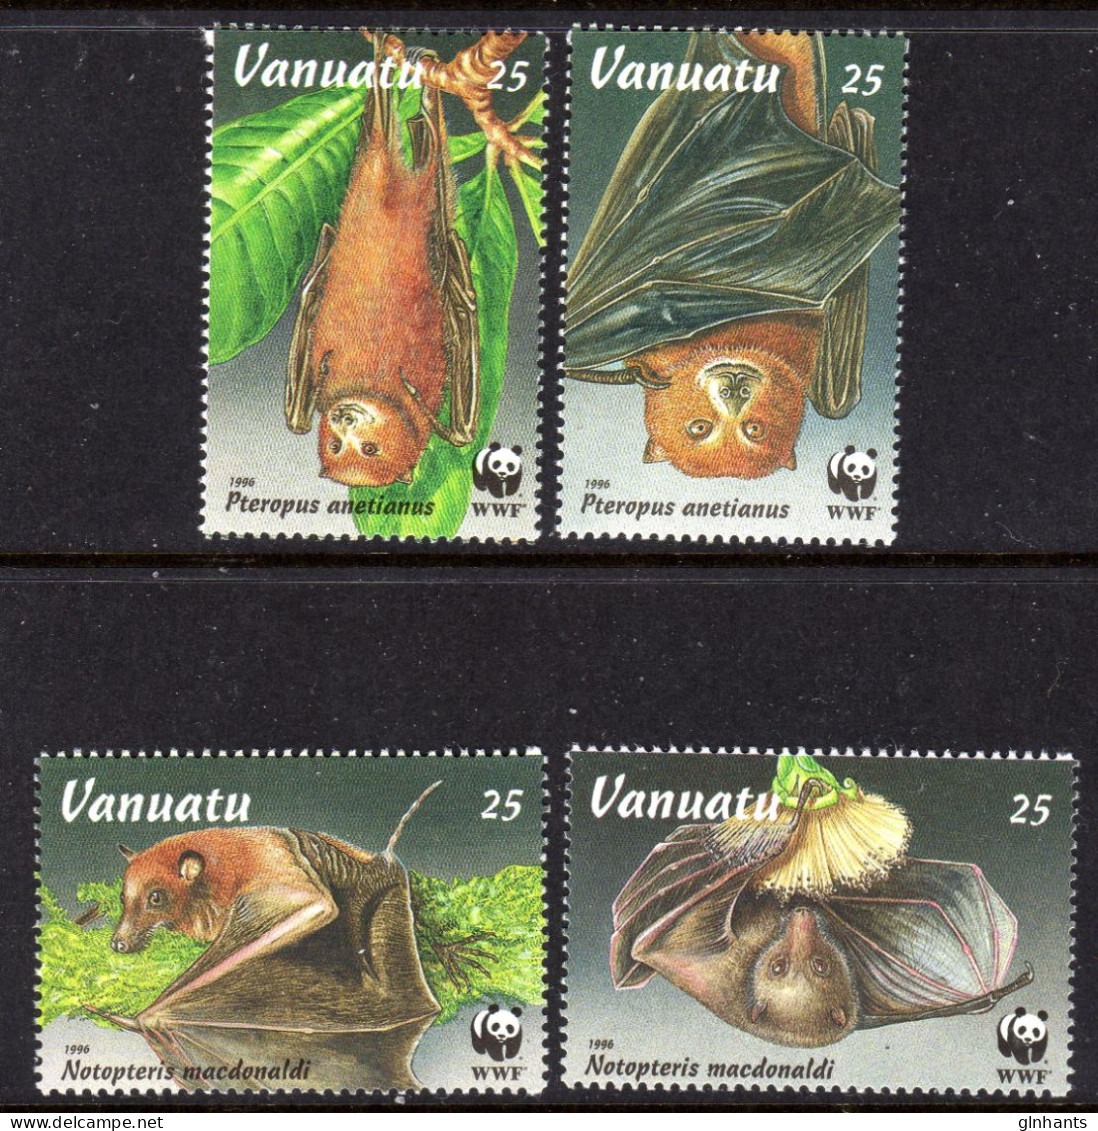 VANUATU  - 1996 WWF ENDANGERED SPECIES FLYING FOXES BATS SET (4V) FINE MNH ** SG 716-719 - Vanuatu (1980-...)